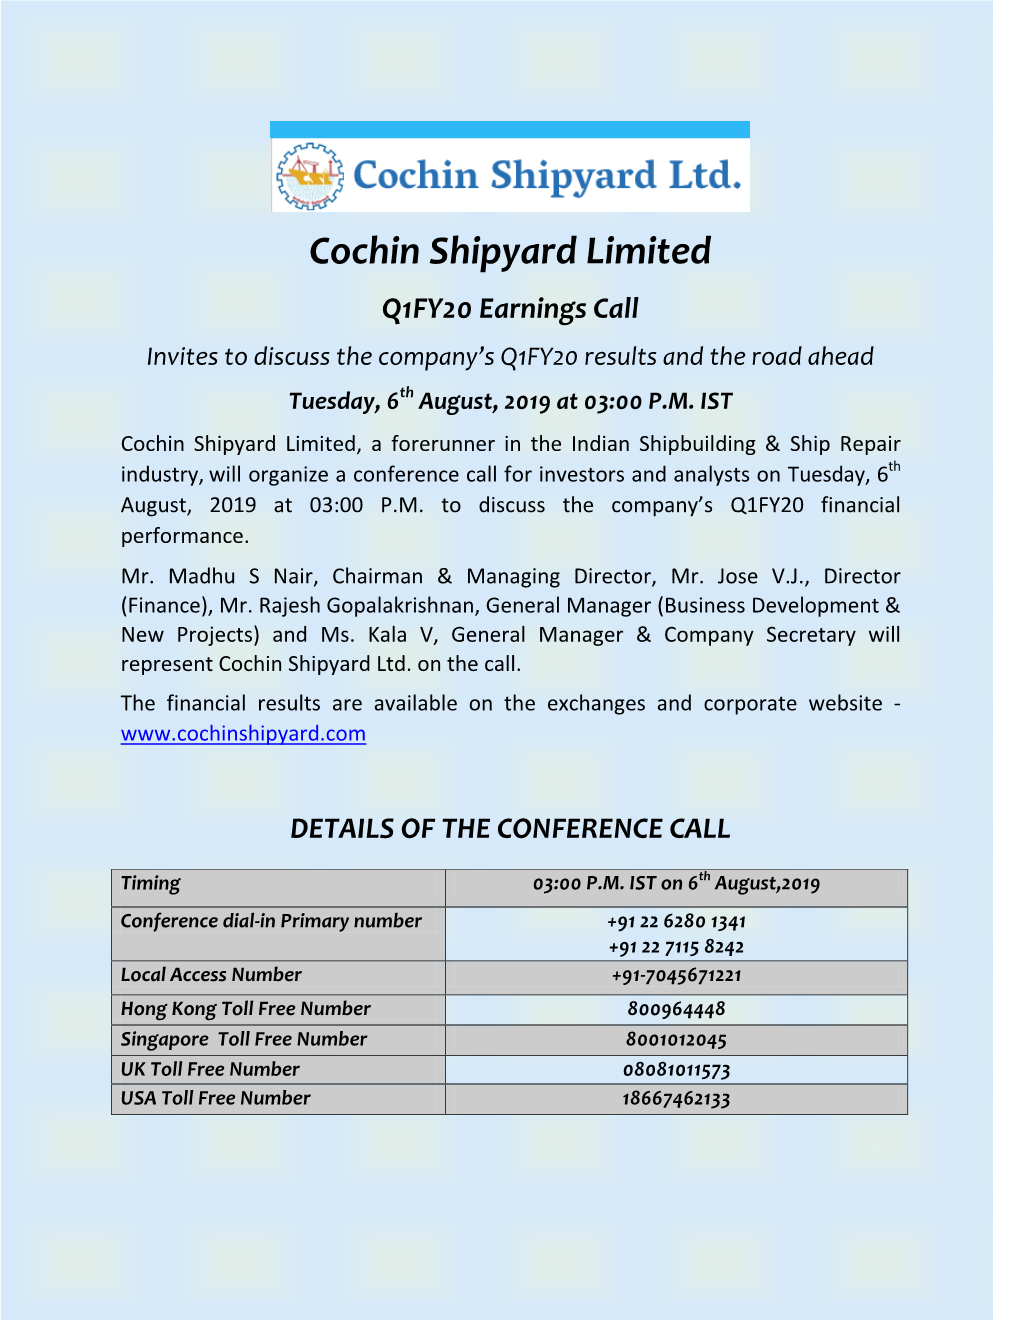 About Cochin Shipyard Limited